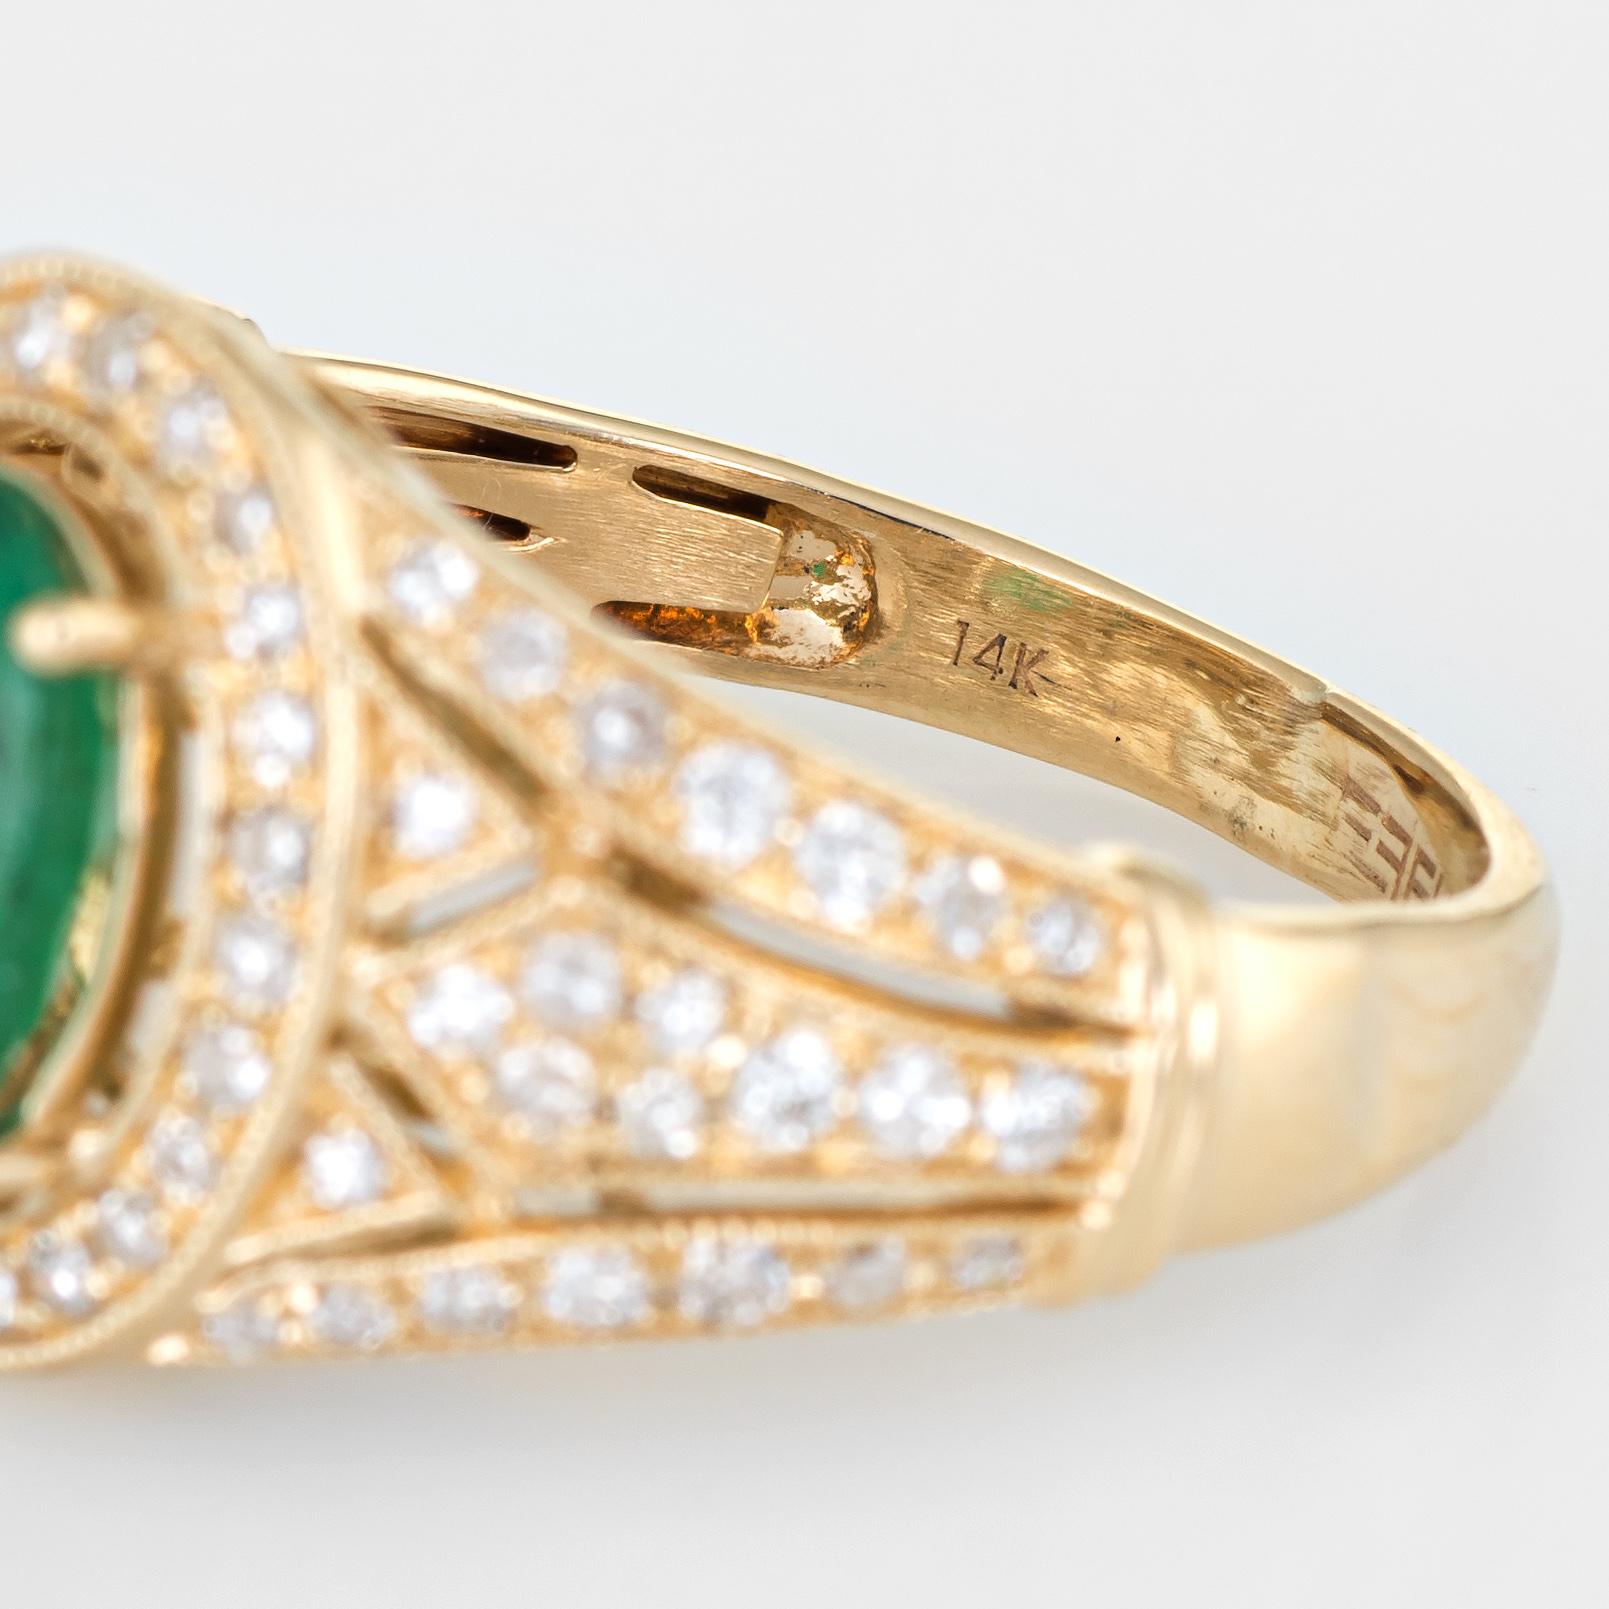 Oval Cut Estate Effy Emerald Diamond Ring 14 Karat Yellow Gold Fine Gemstone Jewelry